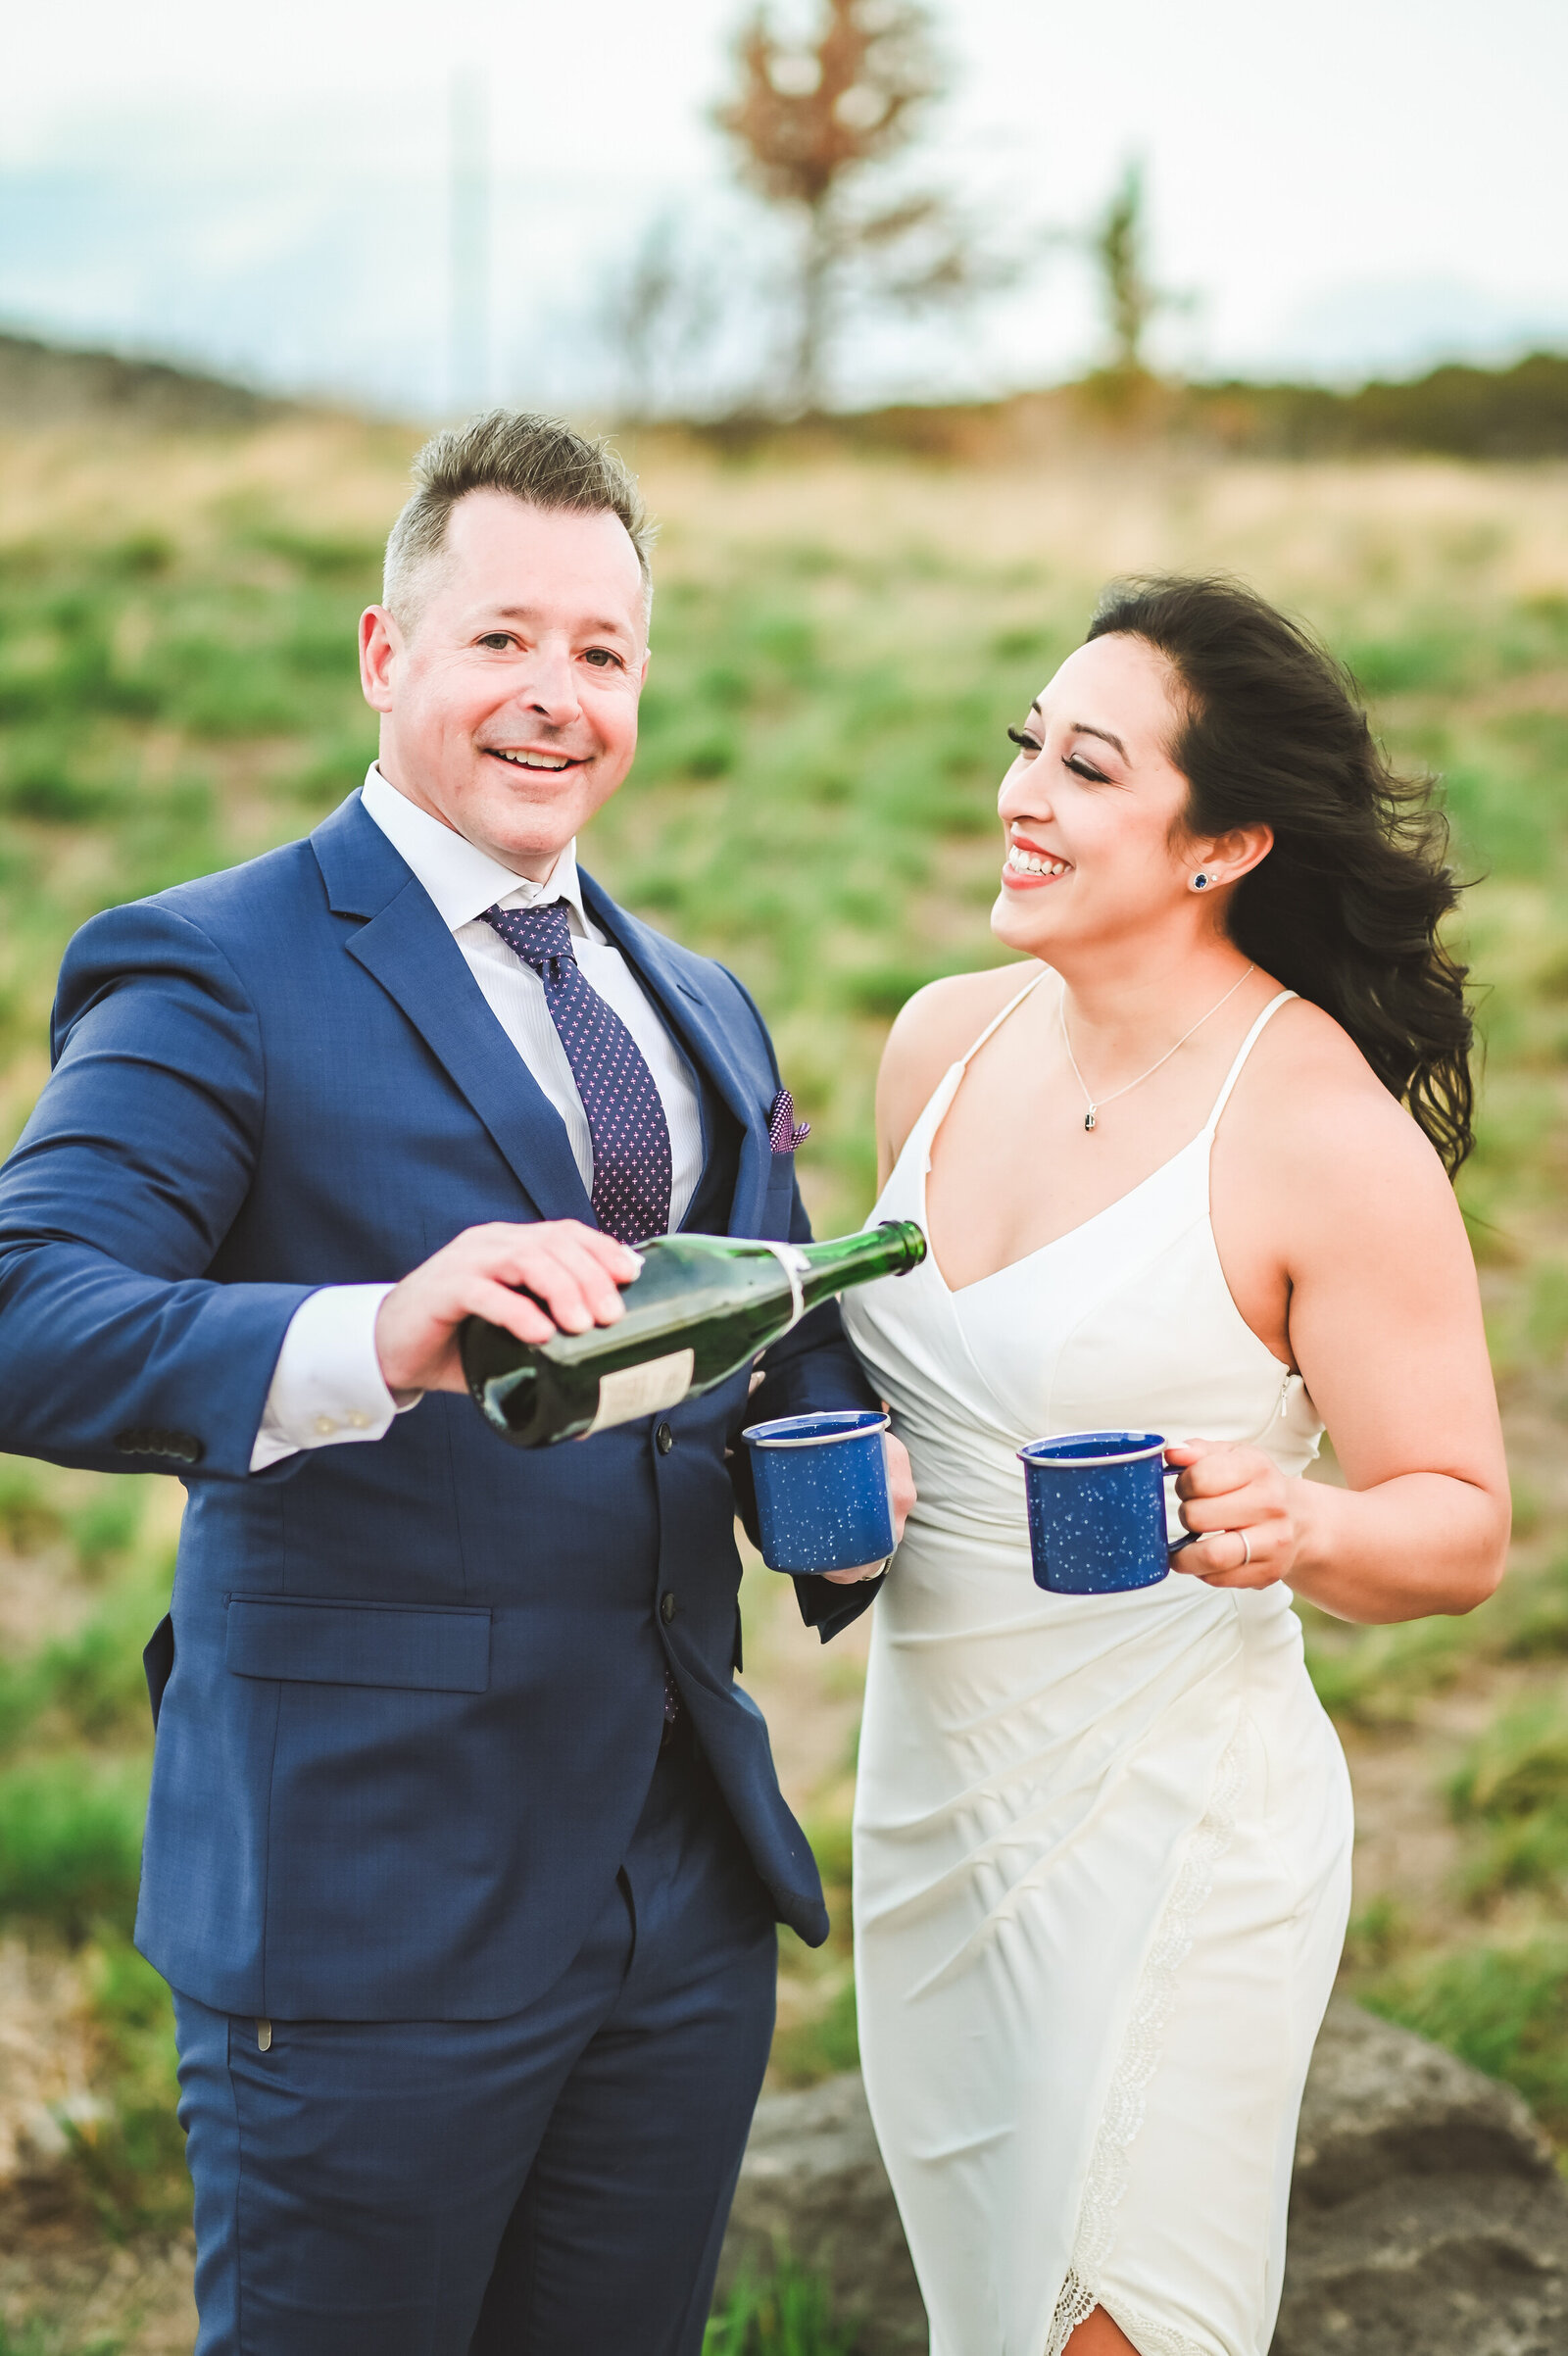 Jackson Hole videographer captures couple celebrating recent Jackson Hole elopement with champagne pop